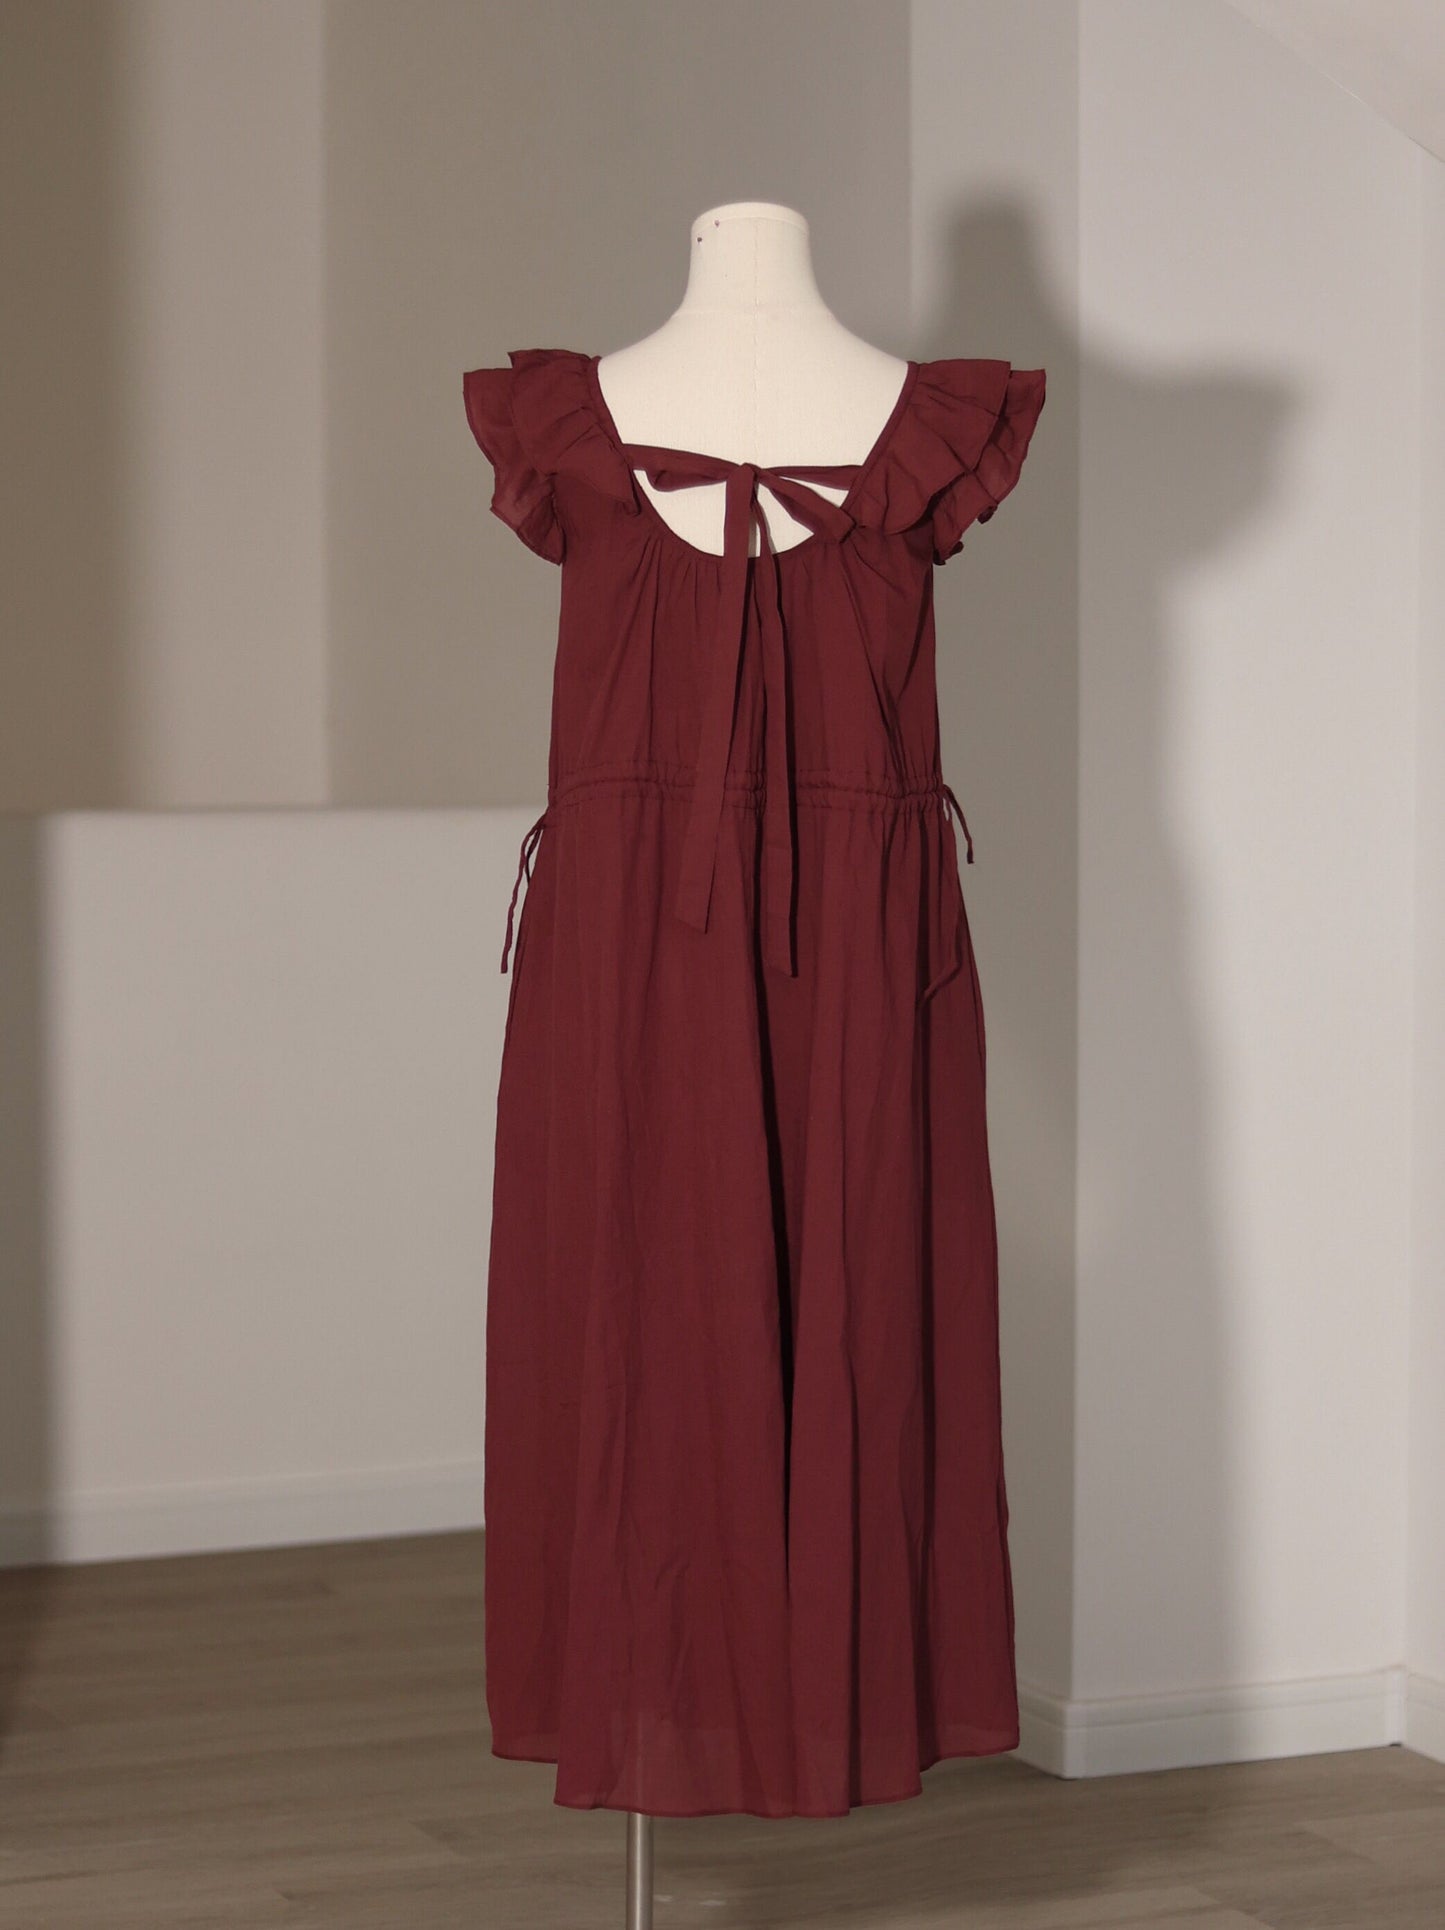 Vintage Round Neck Romantic Burgundy Dress